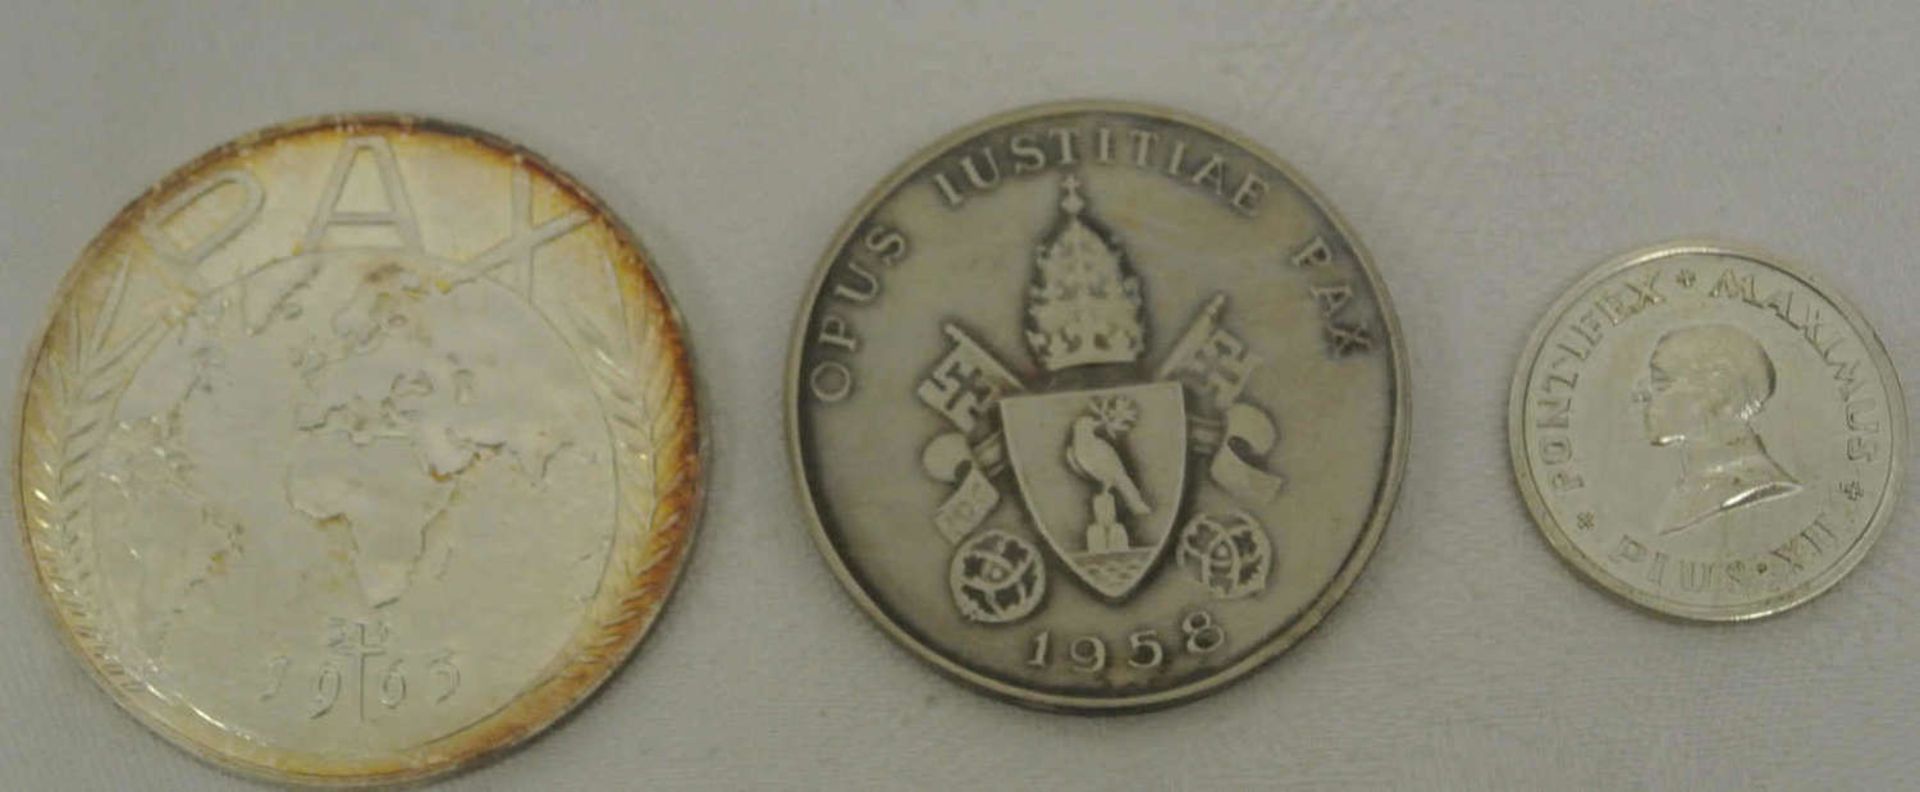 3 Silbermedaillen Vatikan, bestehend aus 1x Pontifex Maximus 1963, 1x Pontifex Maximus 1958, sowie - Bild 2 aus 2